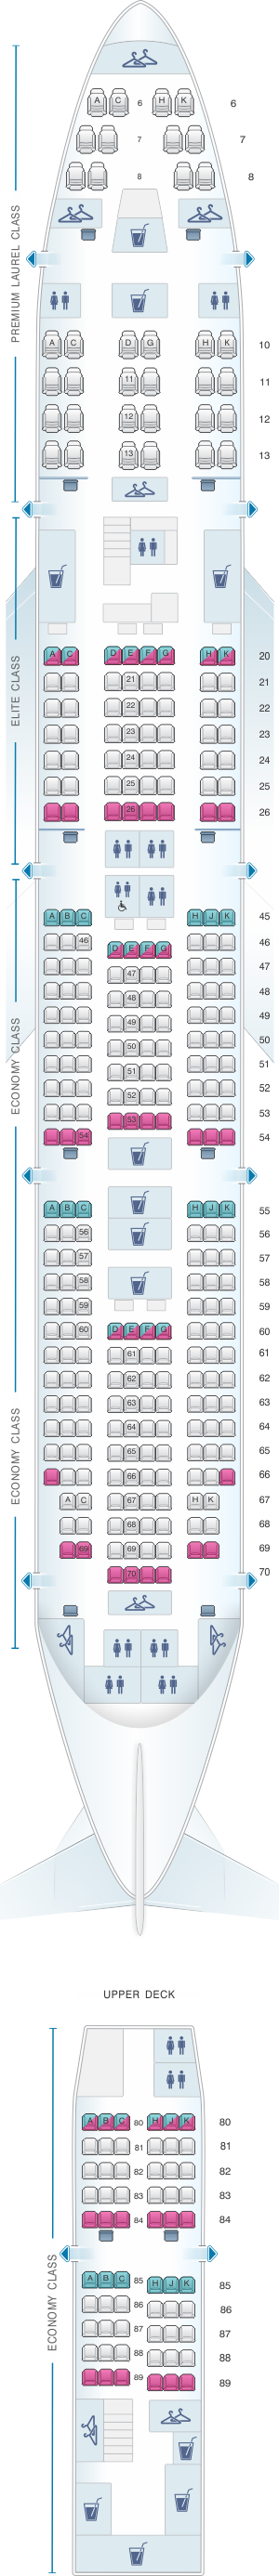 Eva Air 777 300er Seat Map